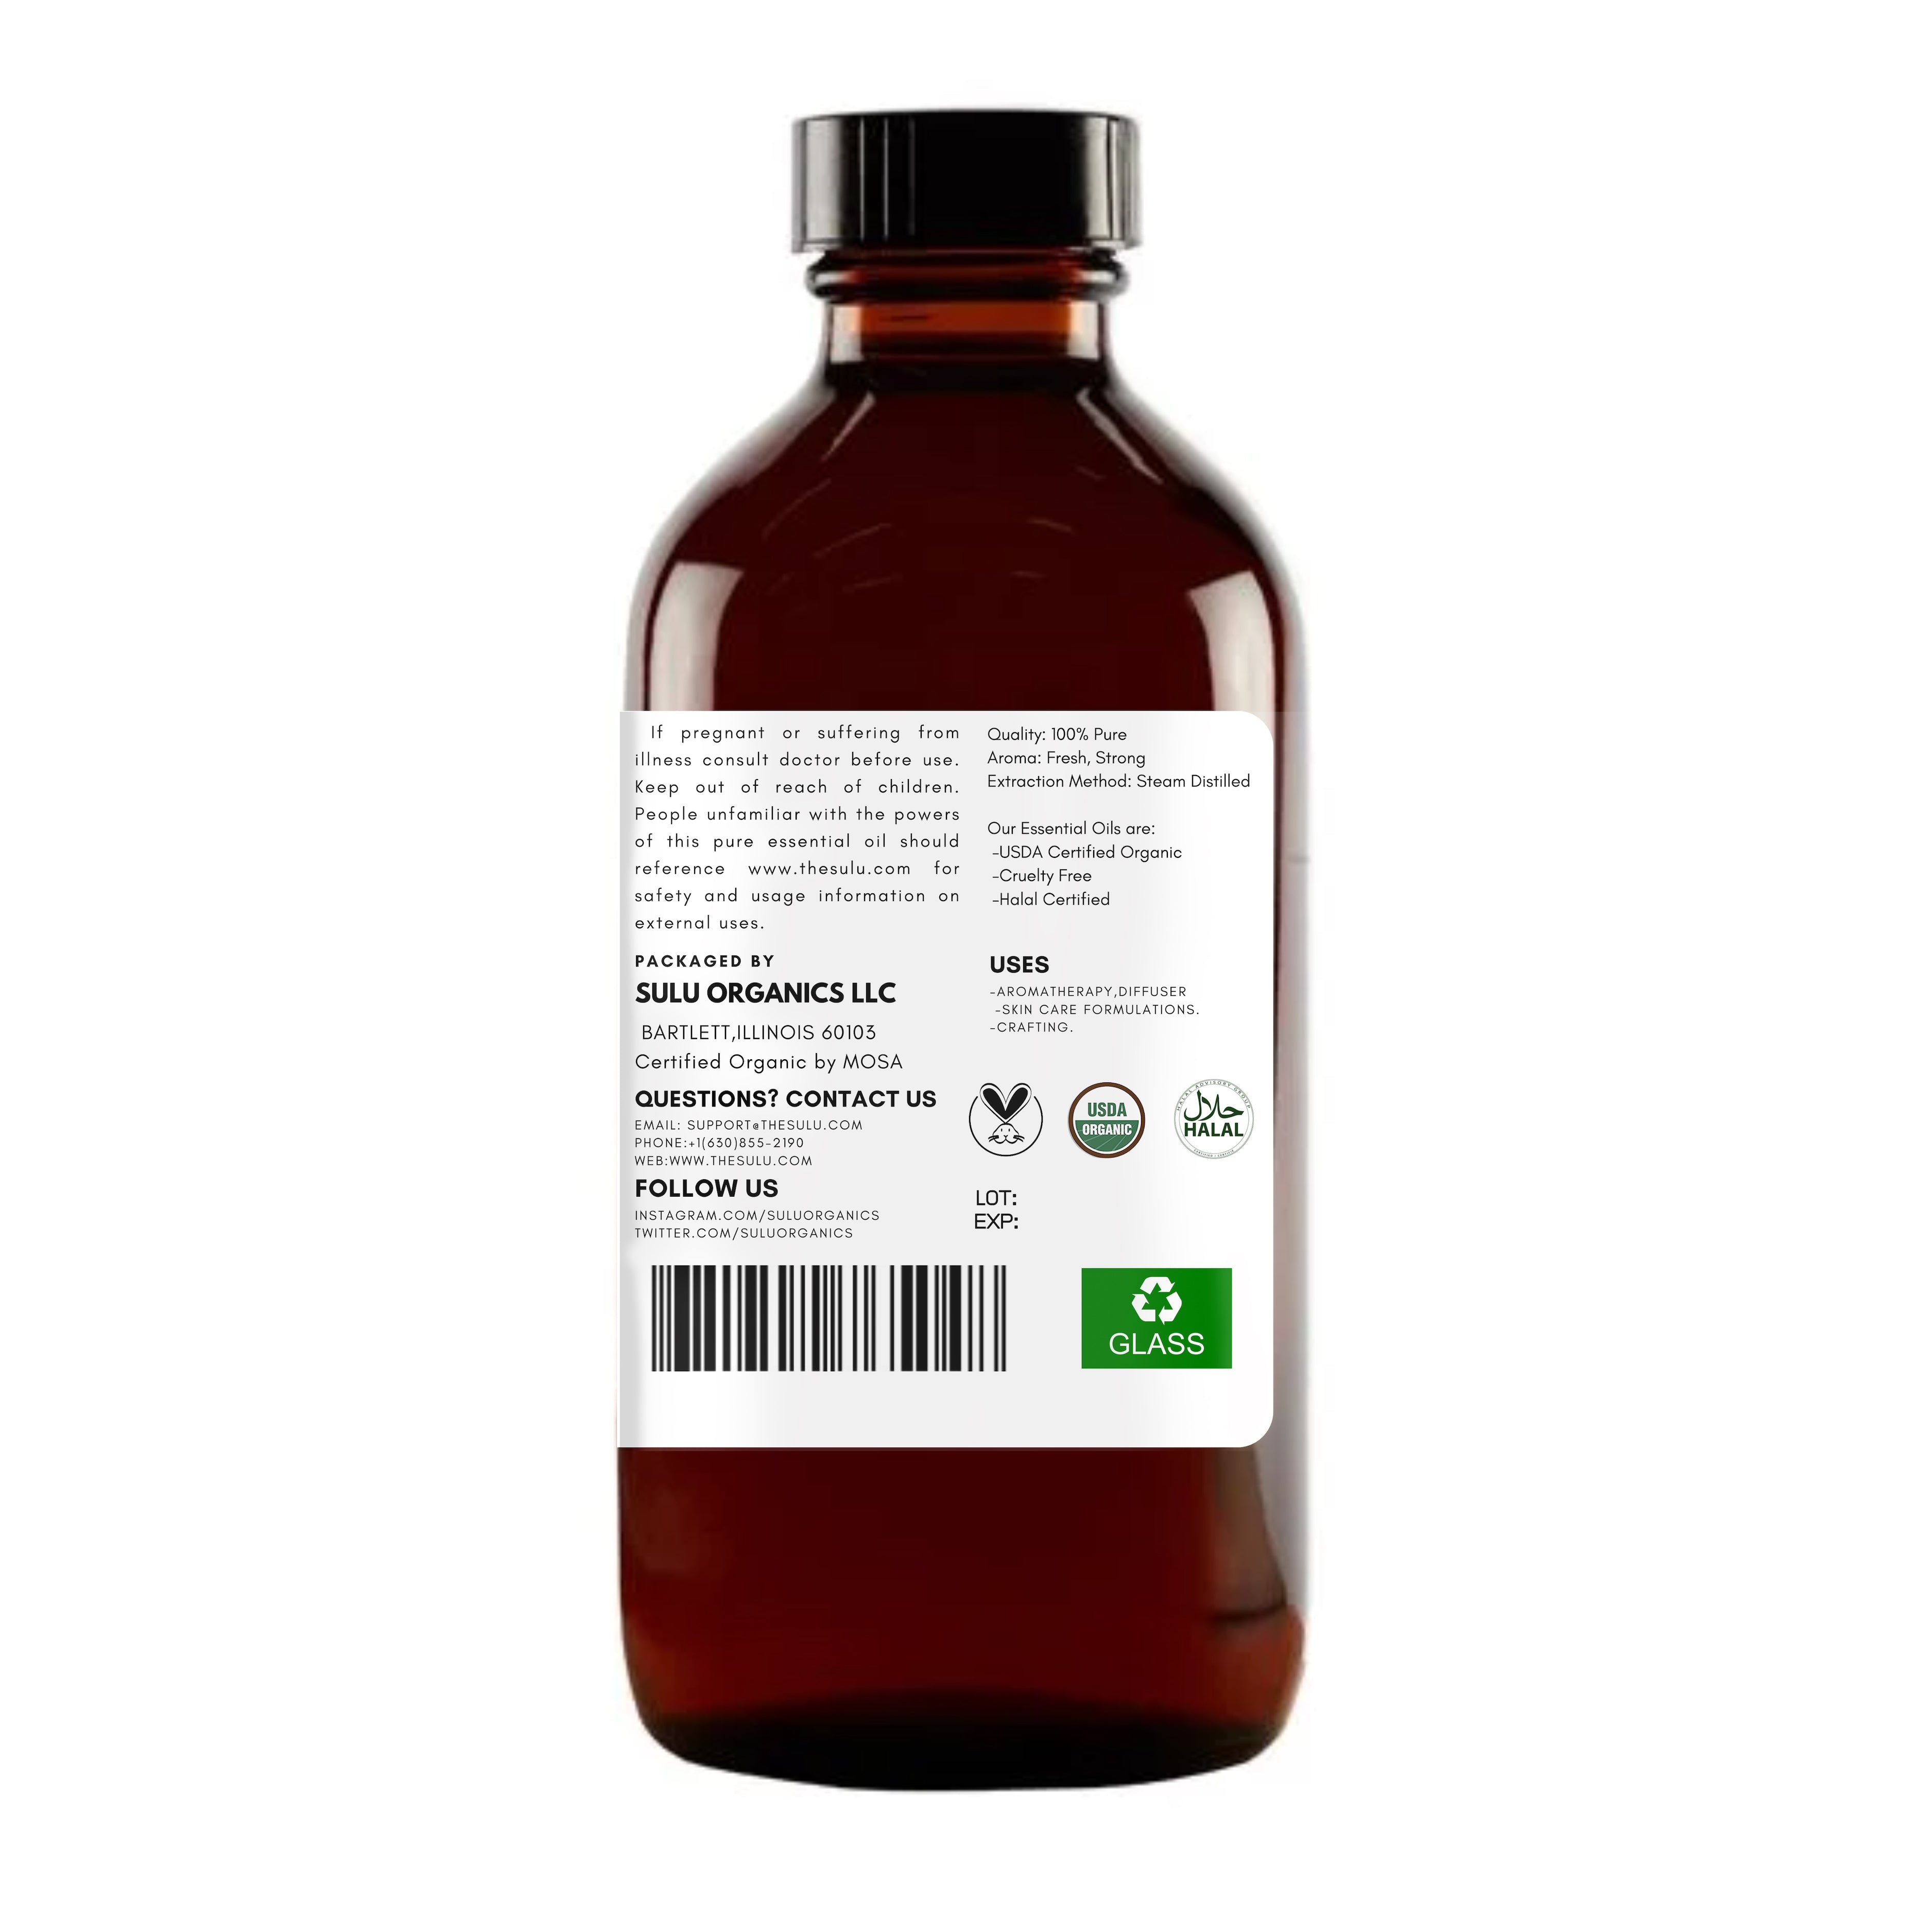 Organic Sandalwood Essential Oil – Skylara Essentials